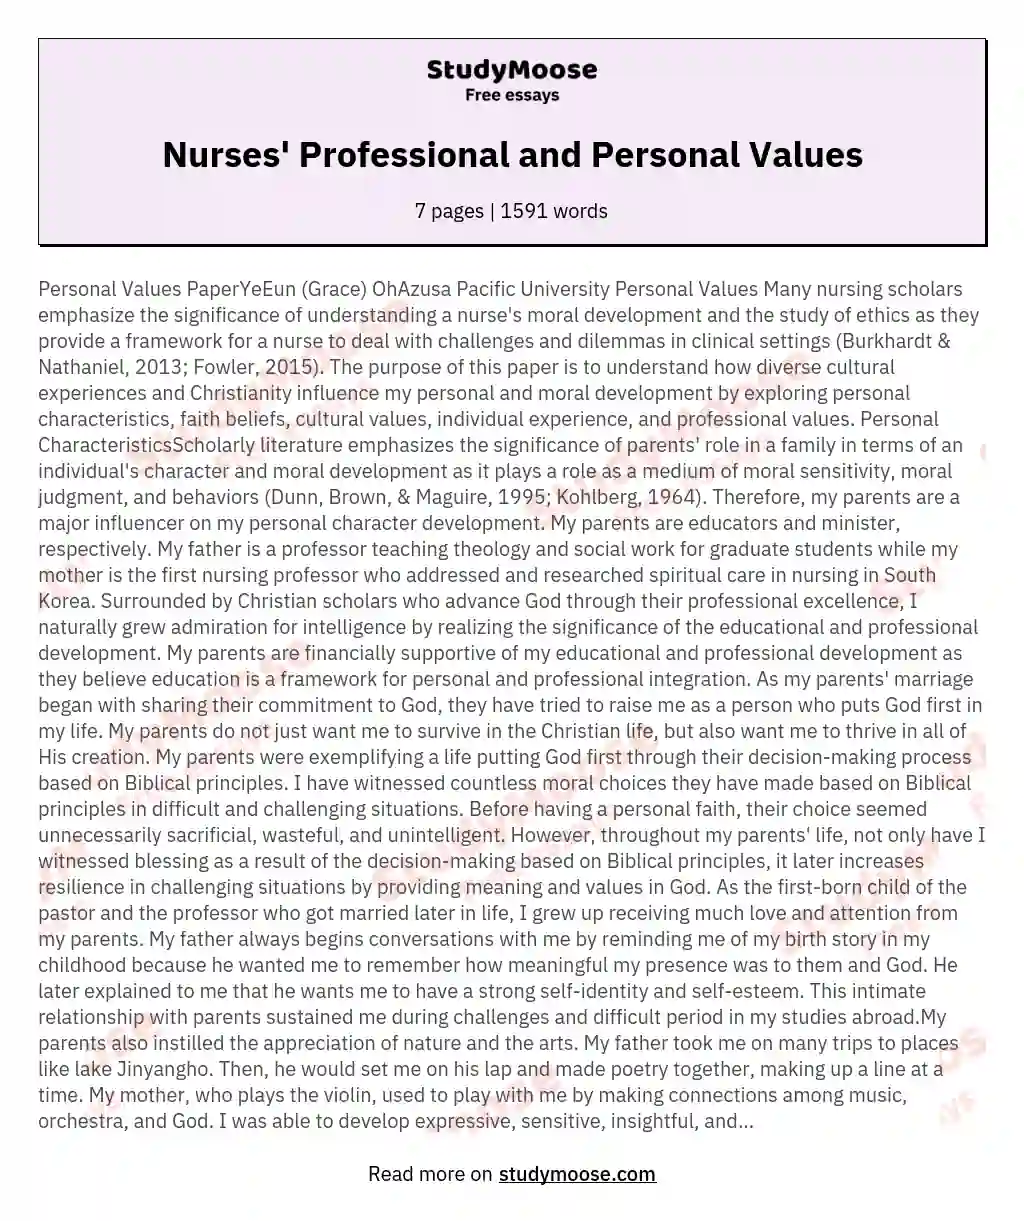 Nurses' Professional and Personal Values essay